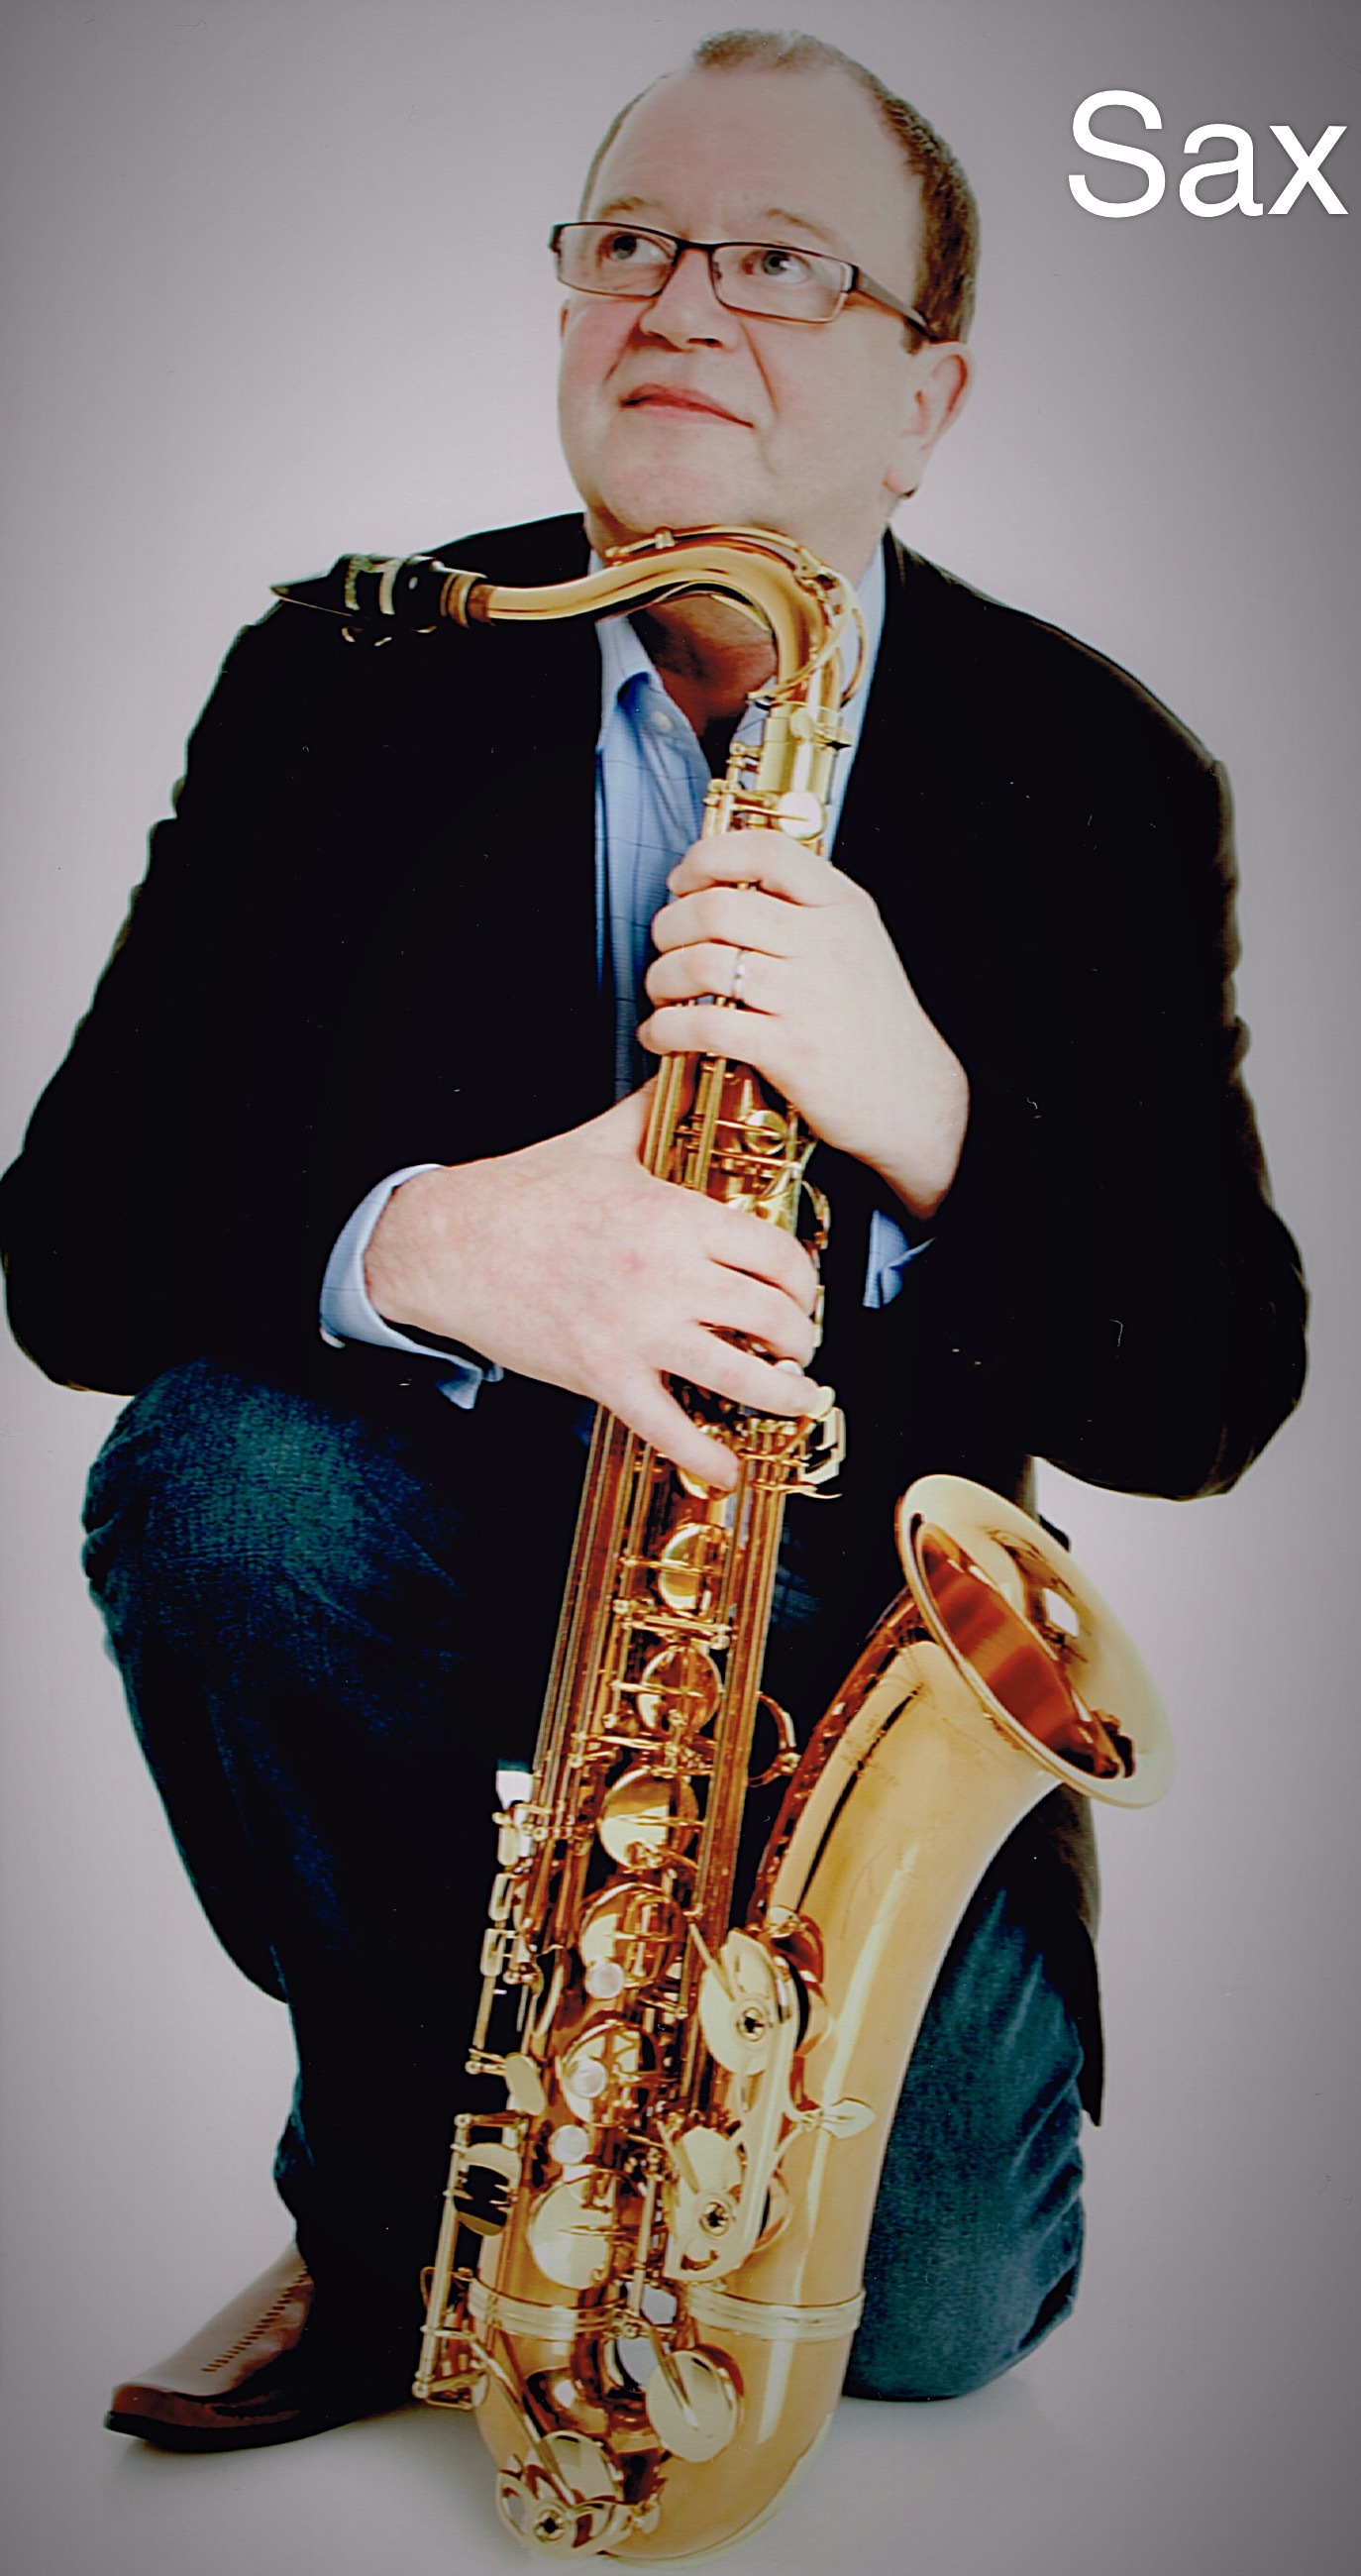 Saxophonist Ken in Lothian, Central Scotland